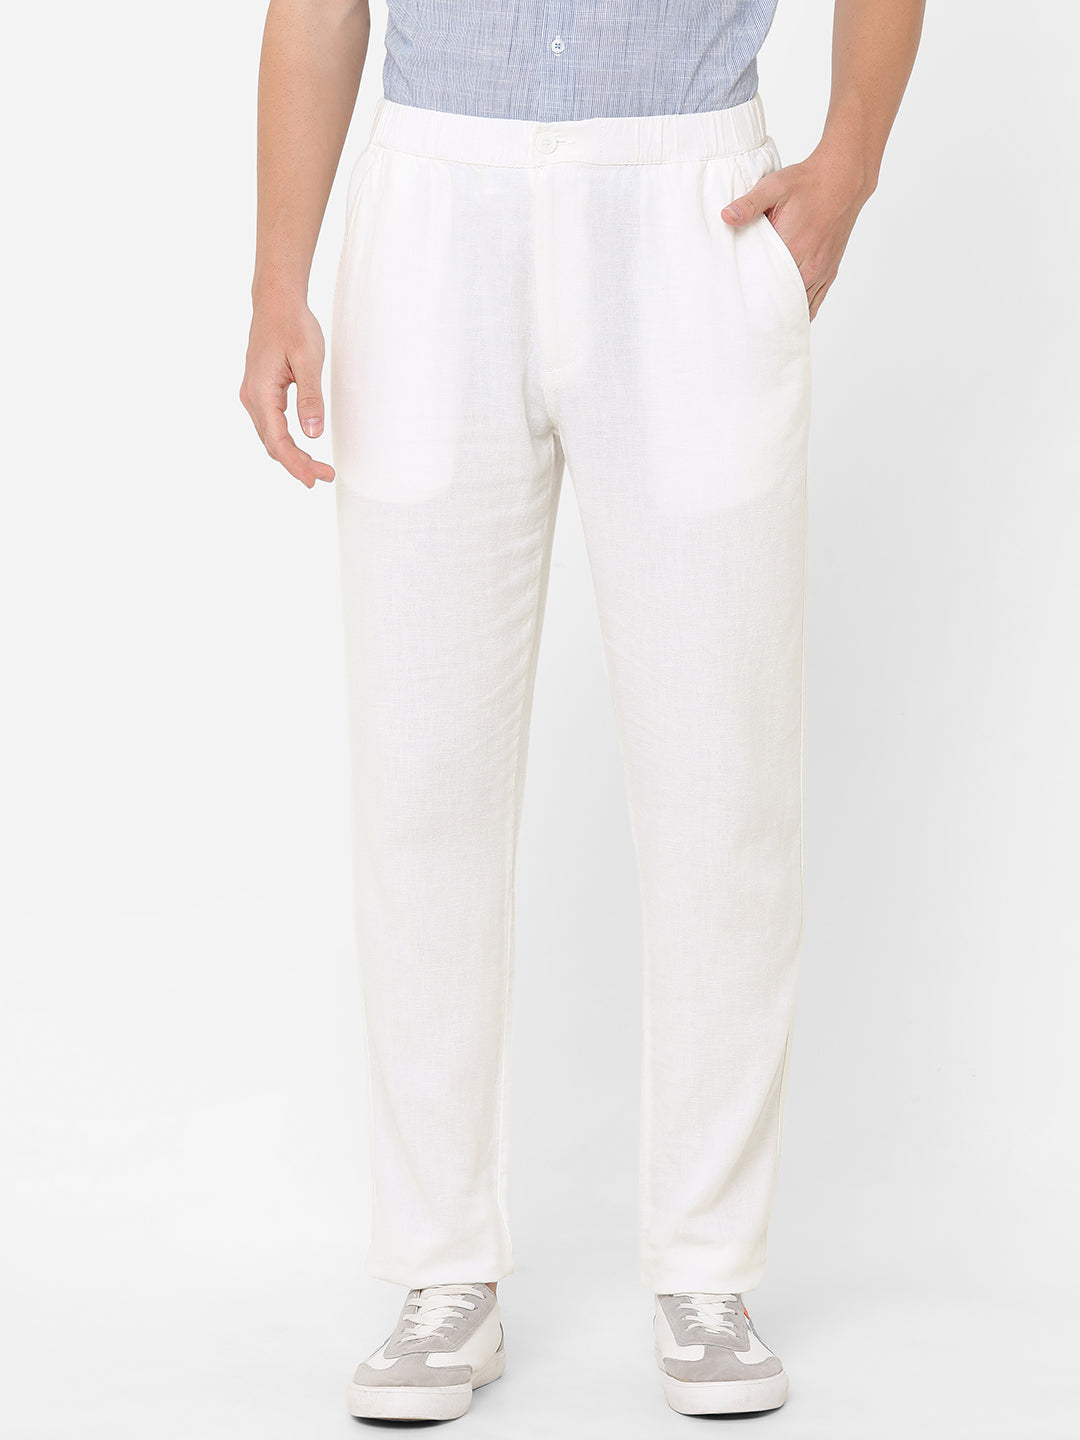 Zunfeo Mens Linen Pants- Wide-Leg Pants Solid Loose Comfy Trousers  Drawstring Elastic Pants Harem Trousers White S - Walmart.com